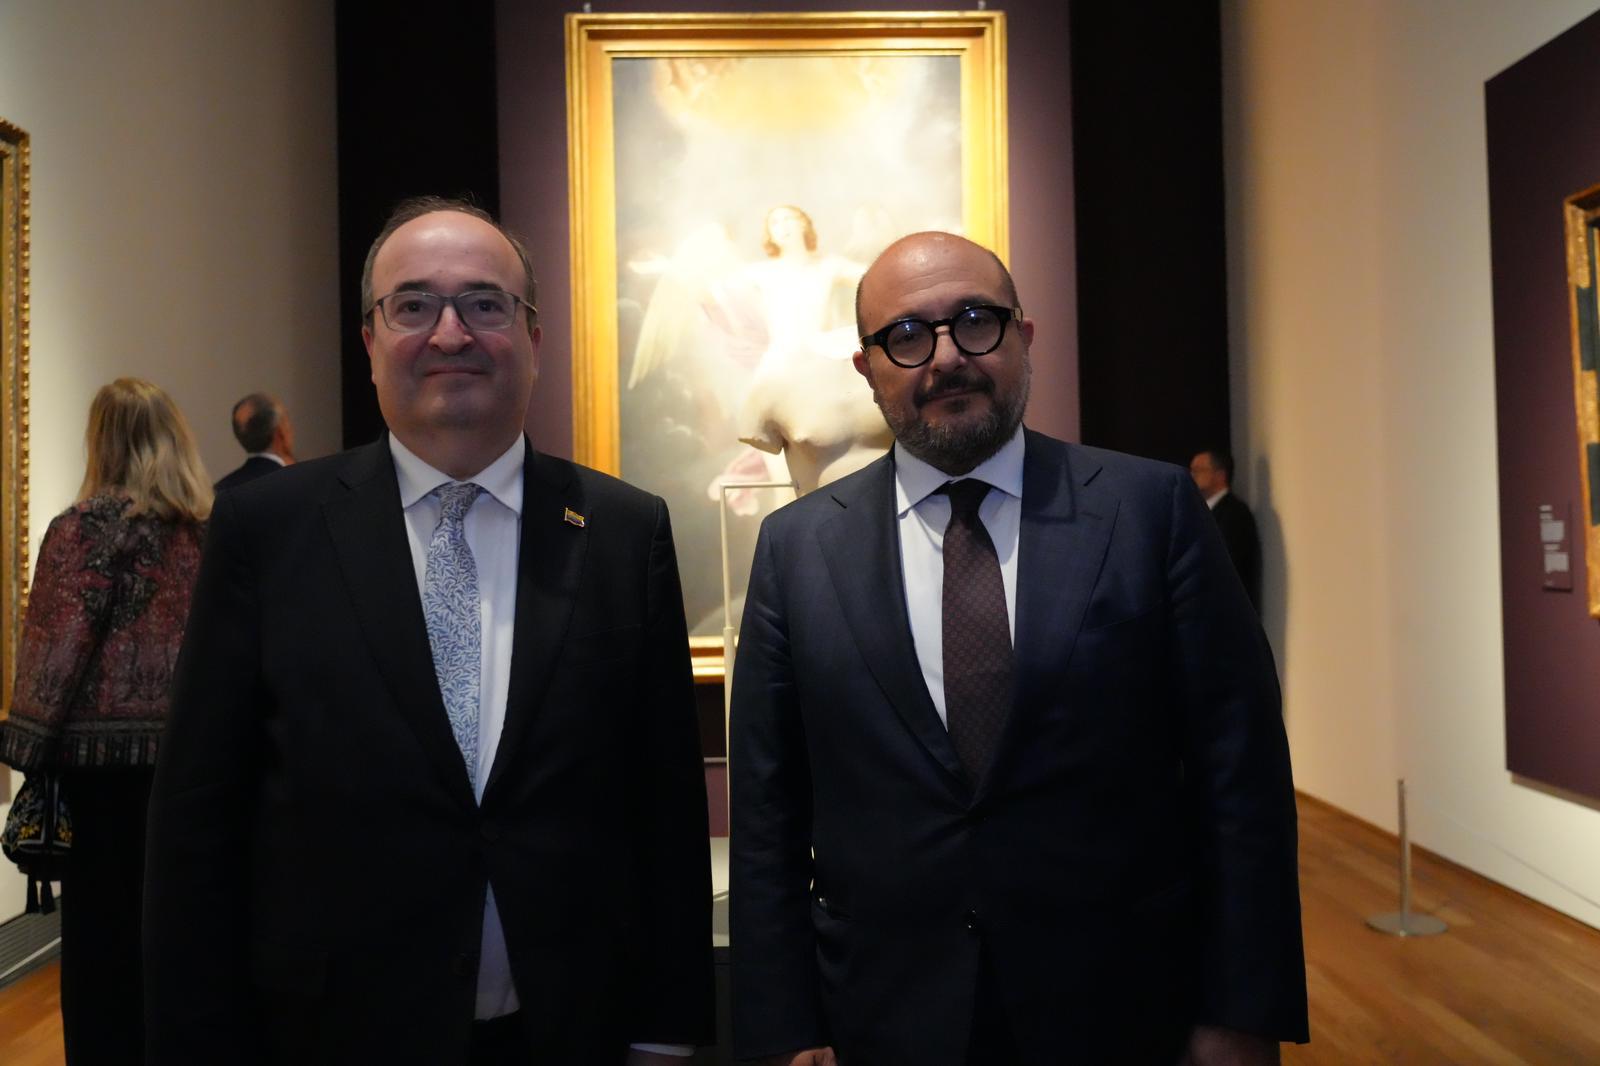 The Guido Reni exhibition inaugurated at the Prado